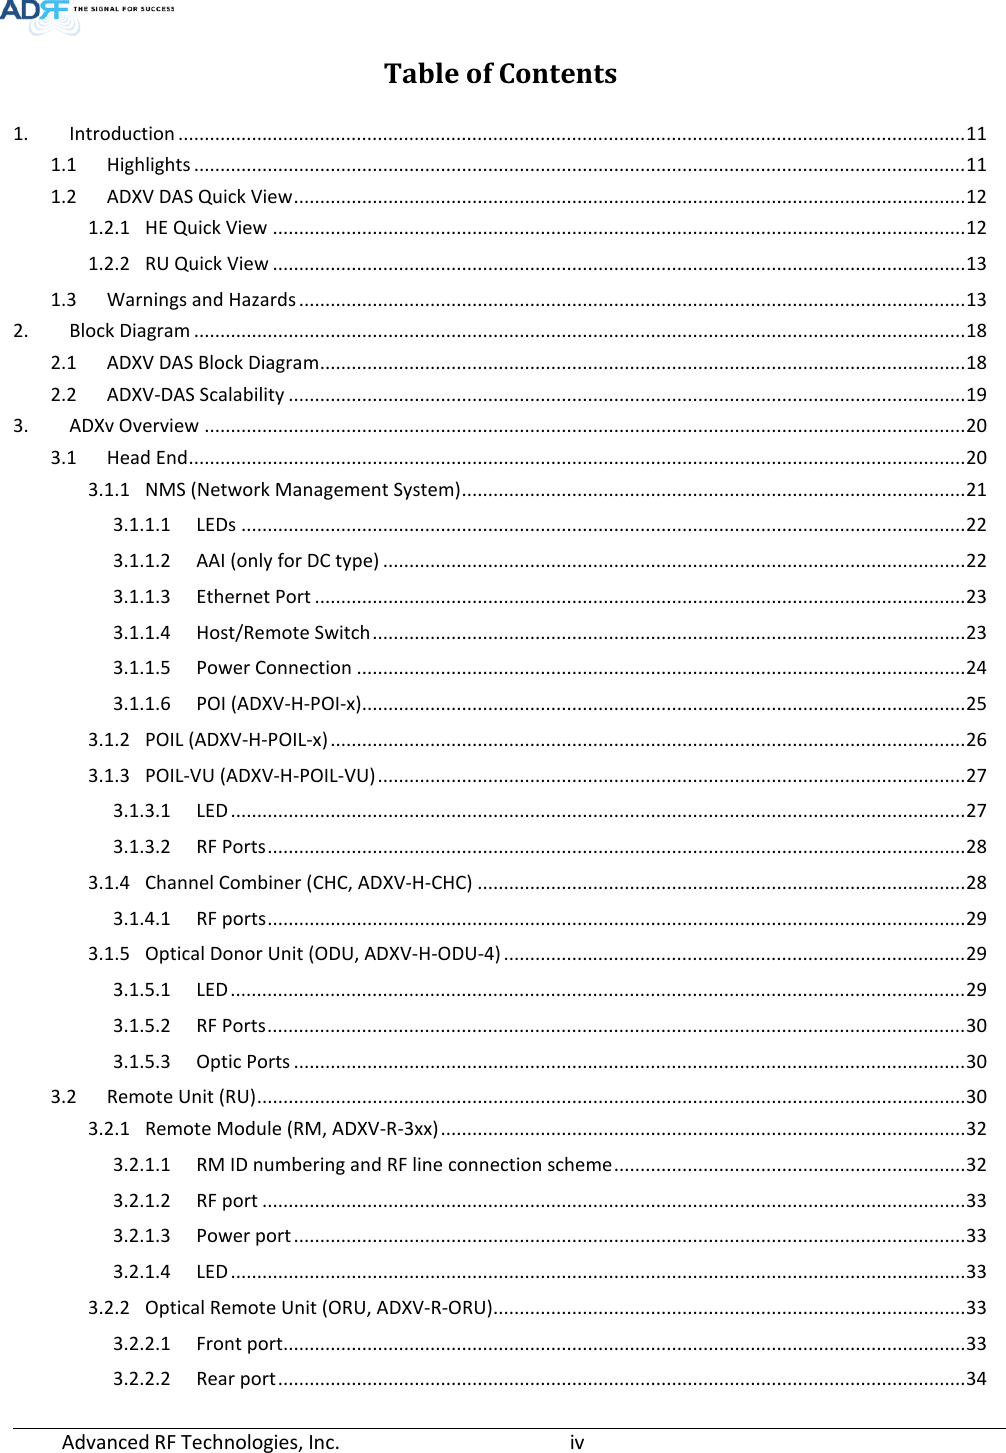 Page 4 of ADRF KOREA ADXV-R-37W DAS (Distributed Antenna System) User Manual ADXV DAS